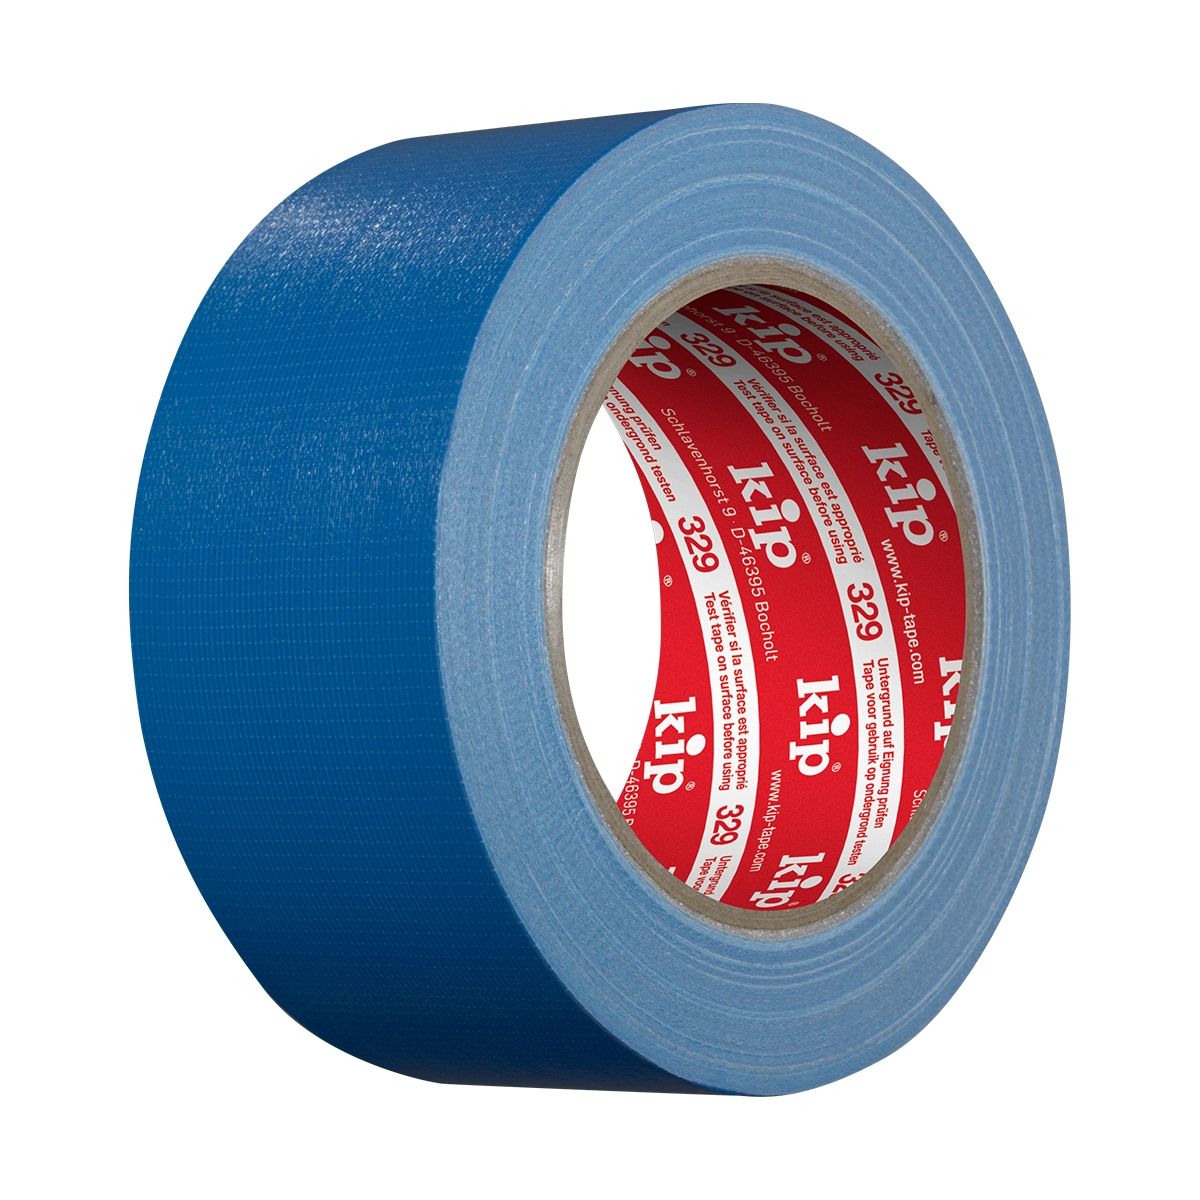 Gewebeband, blau, 50 mm breit, 25 lfdm.